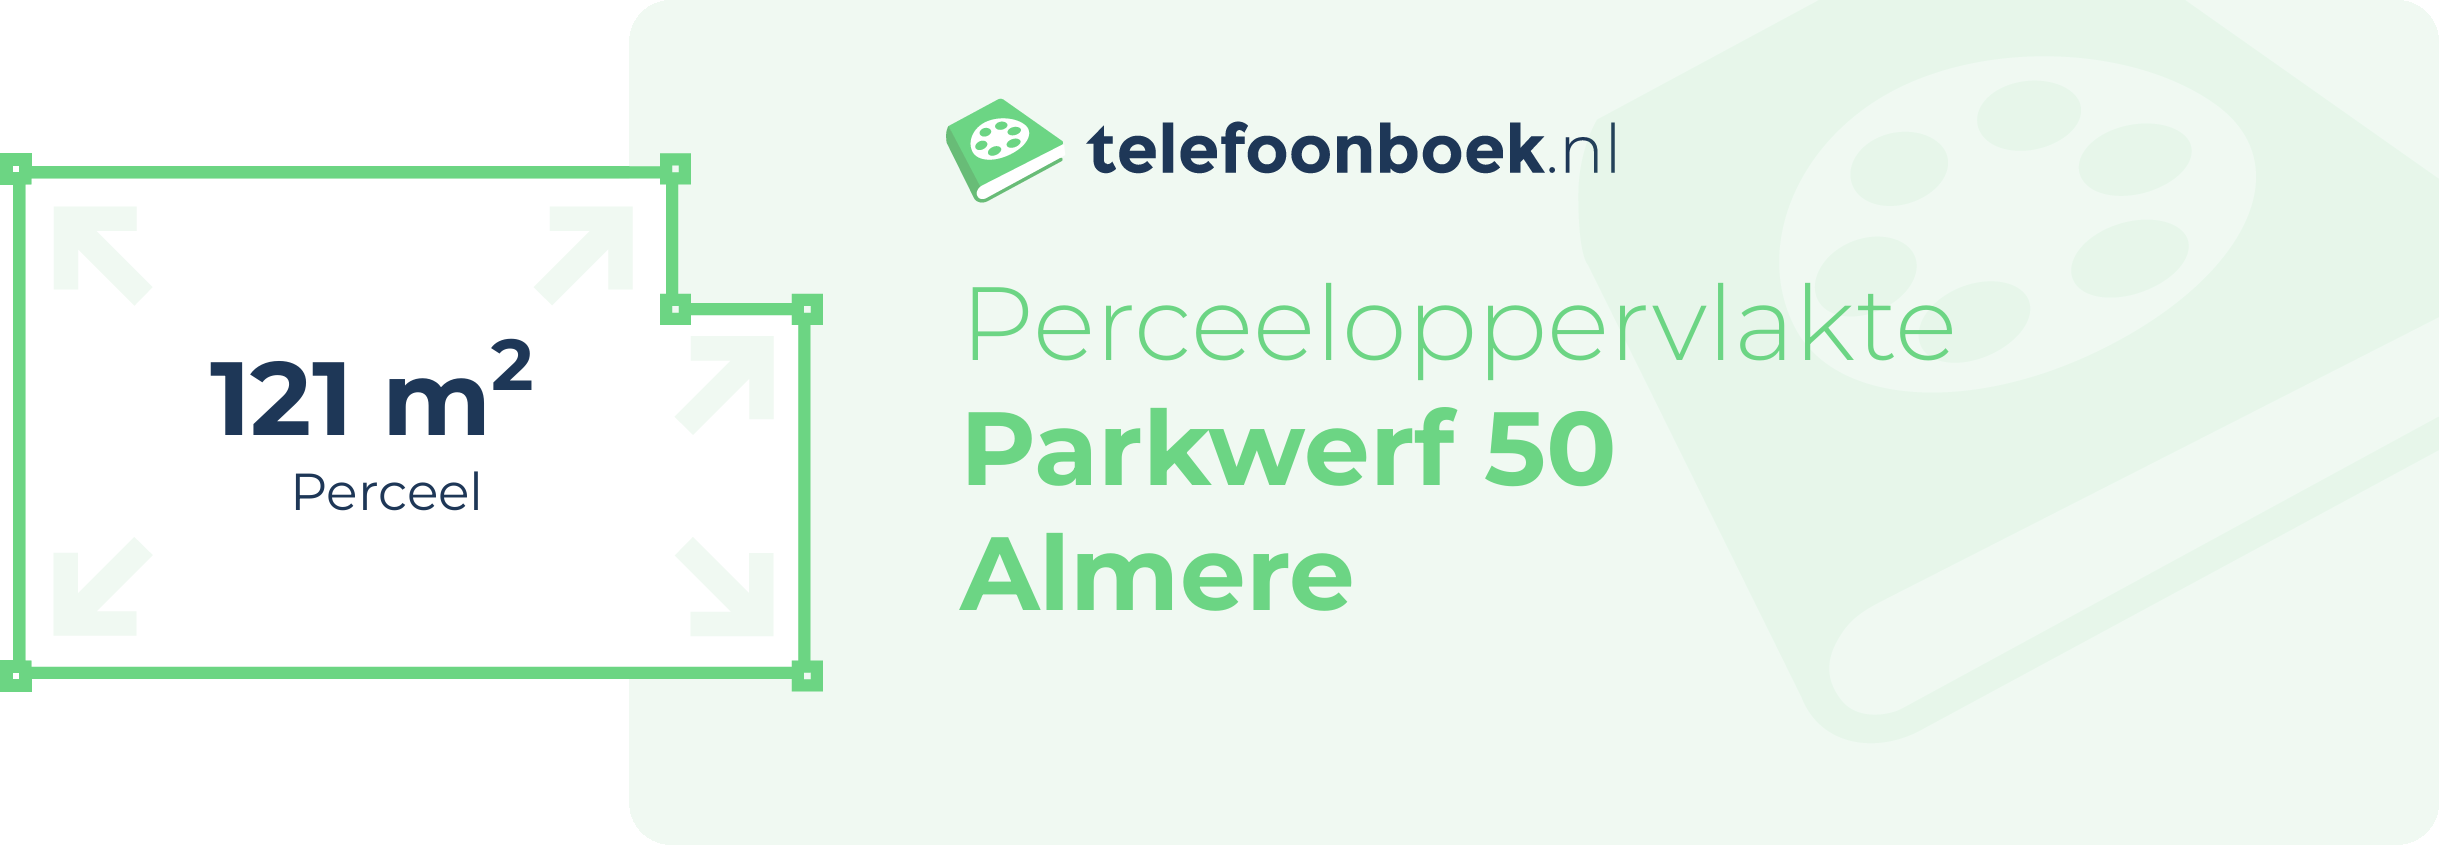 Perceeloppervlakte Parkwerf 50 Almere